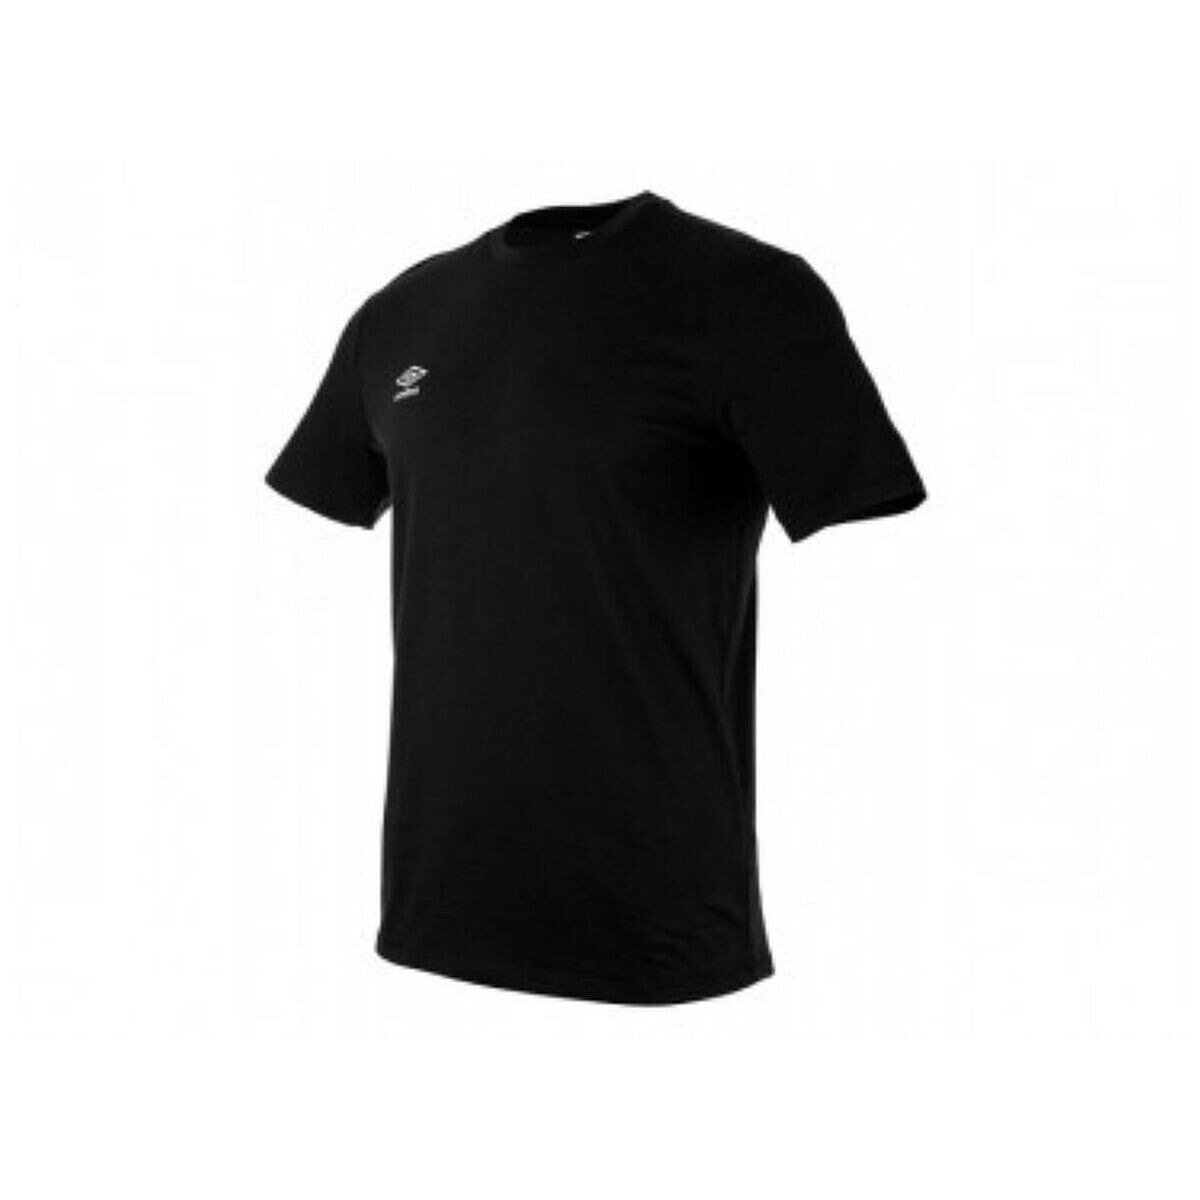 Men’s Short Sleeve T-Shirt Umbro LOGO 65353U 060 Black